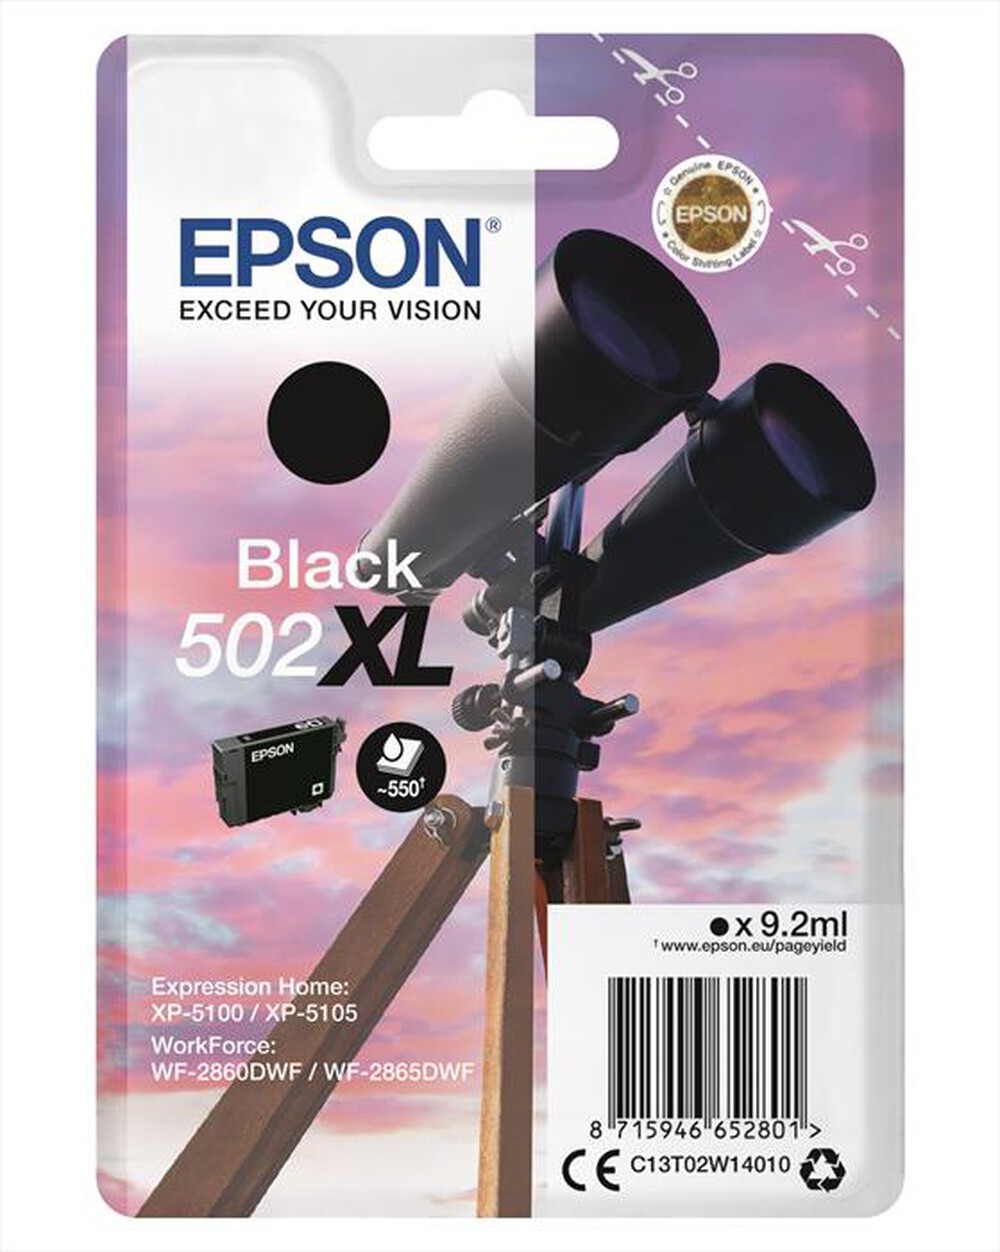 "EPSON - C13T02W14020 - Nero XL"